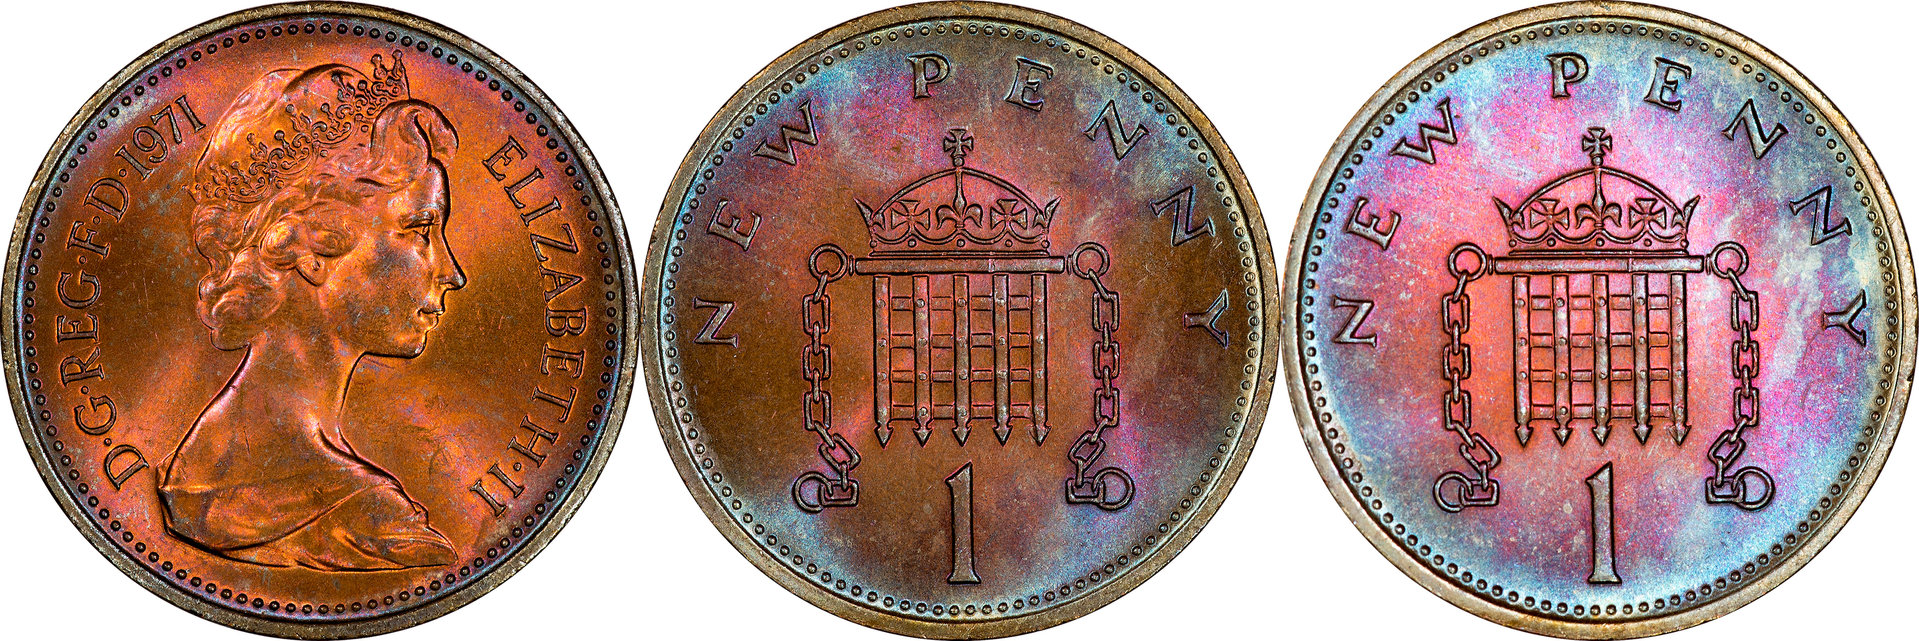 Great Britain - 1971 1 Penny.jpg